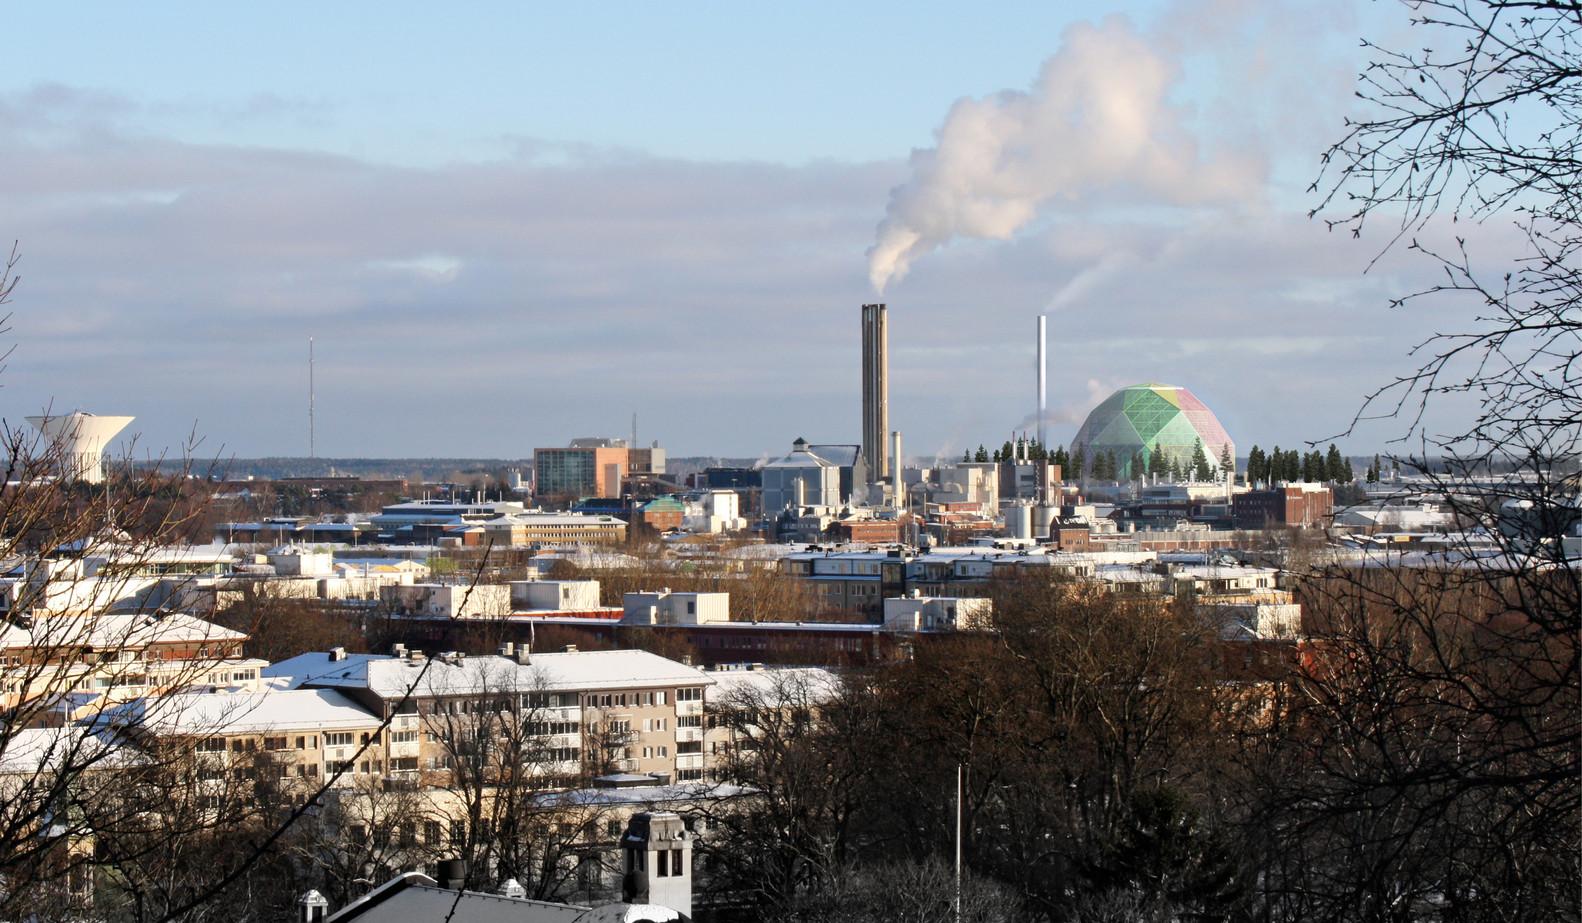 BIGs “Unconventional” Uppsala Power Plant Designed to Host Summer Festivals-2